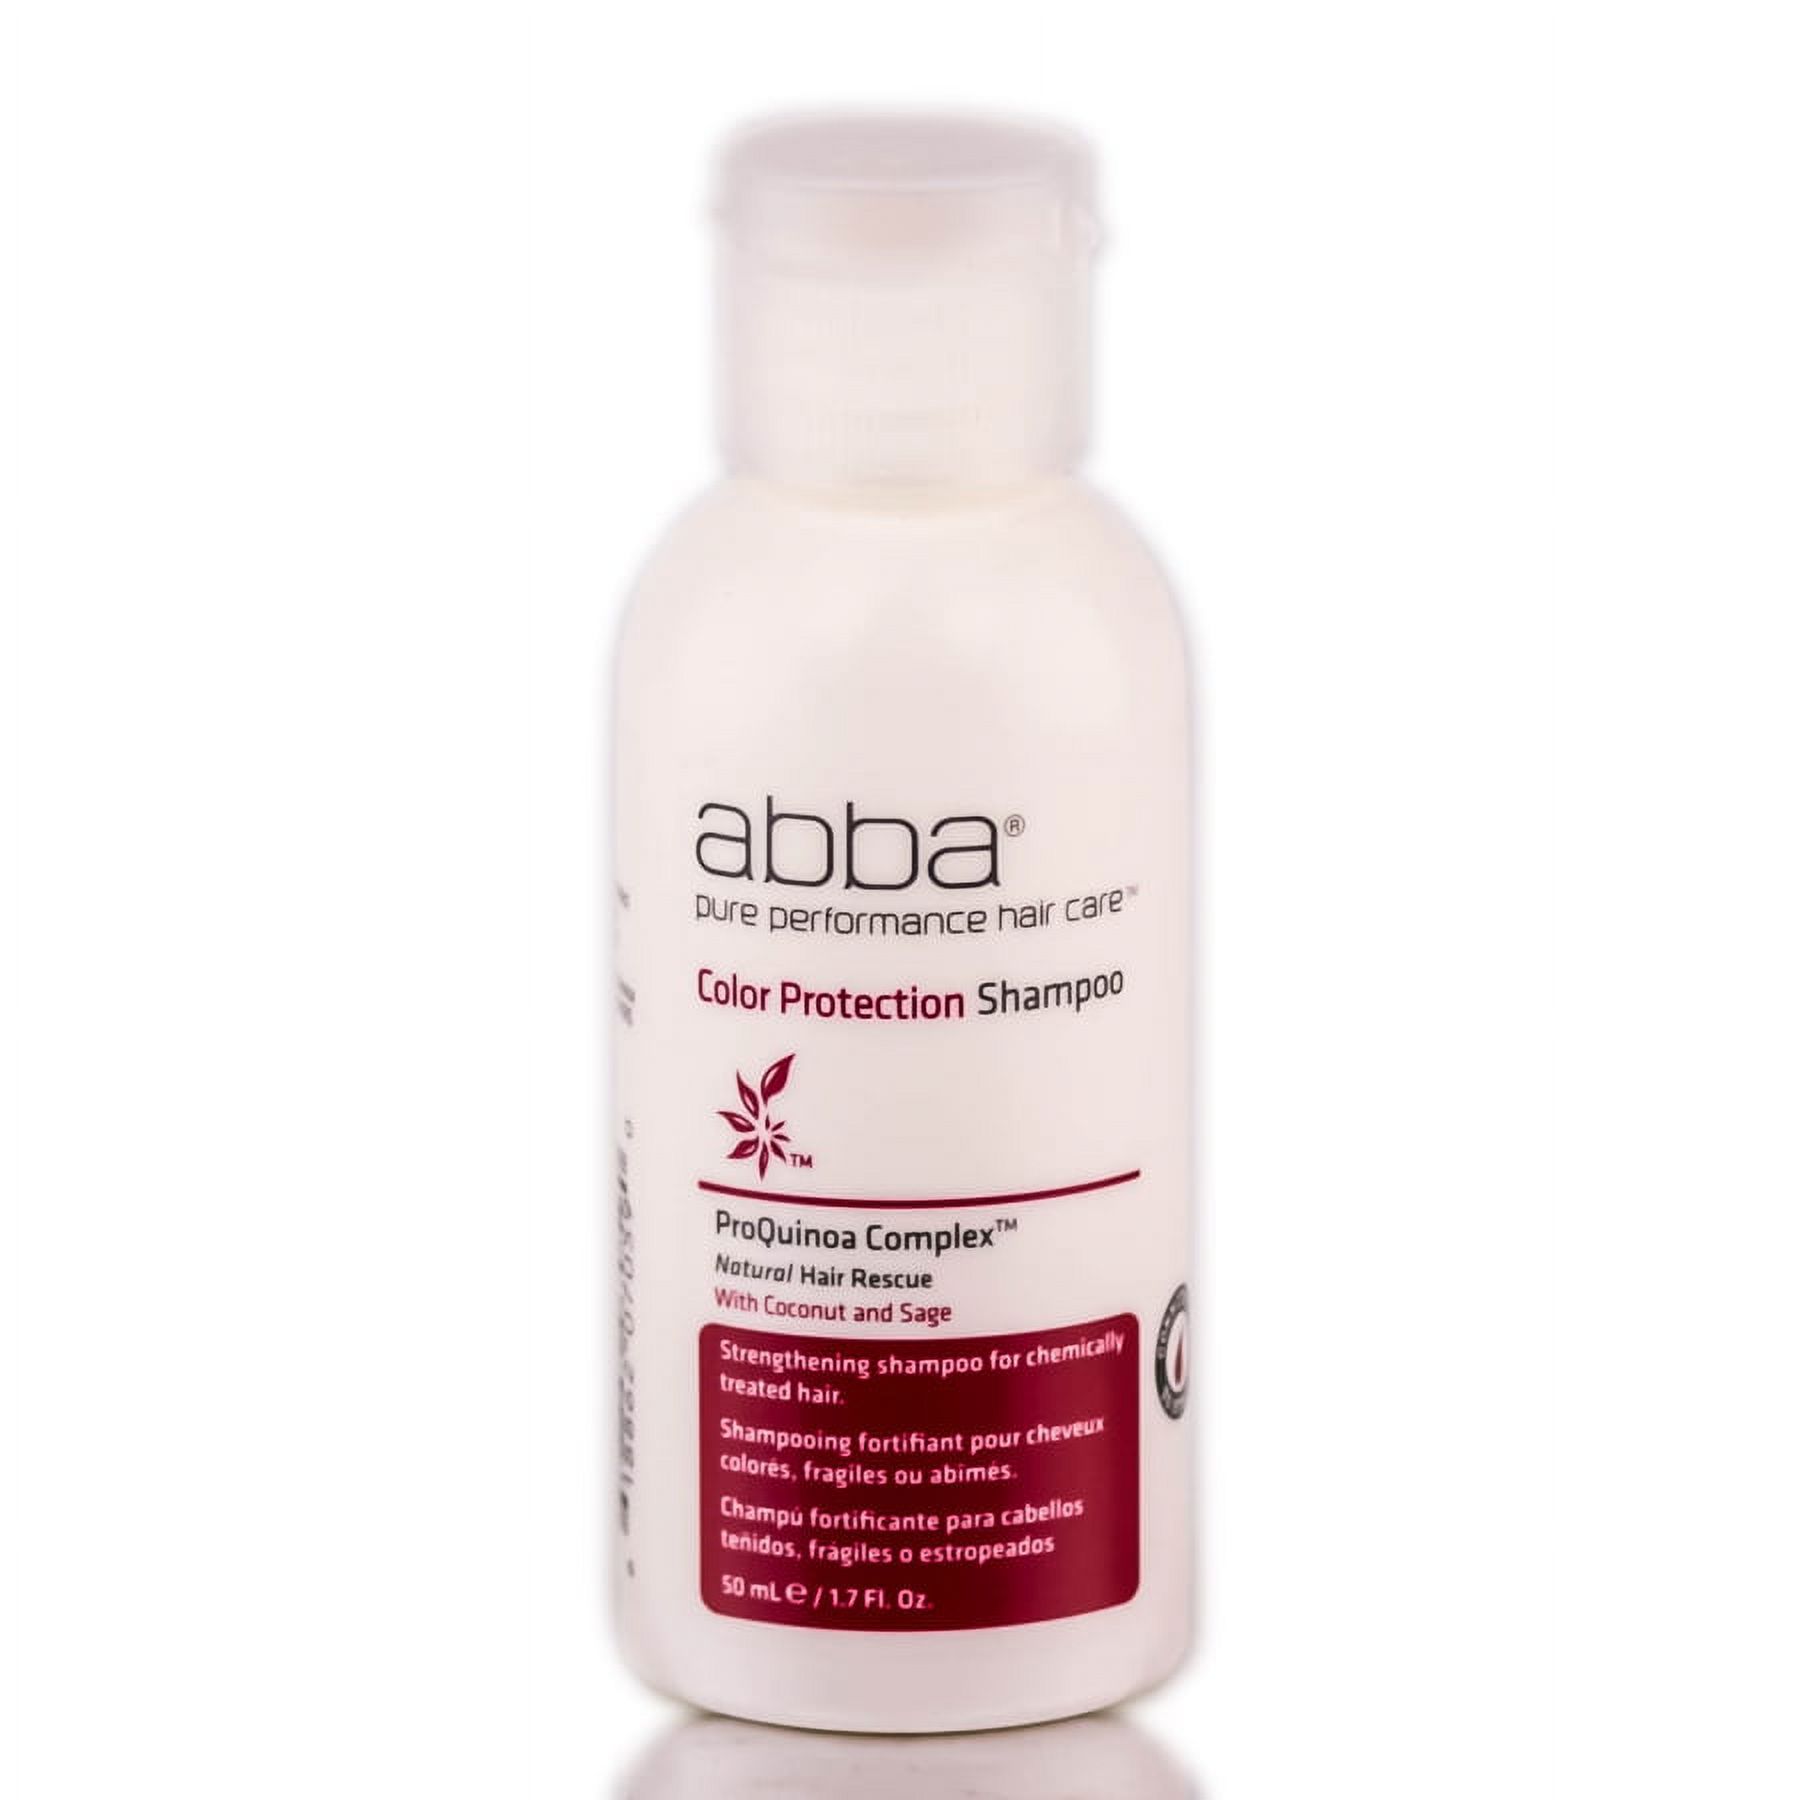 Abba Pure Color Protection Shampoo (1.7 oz) - image 1 of 1